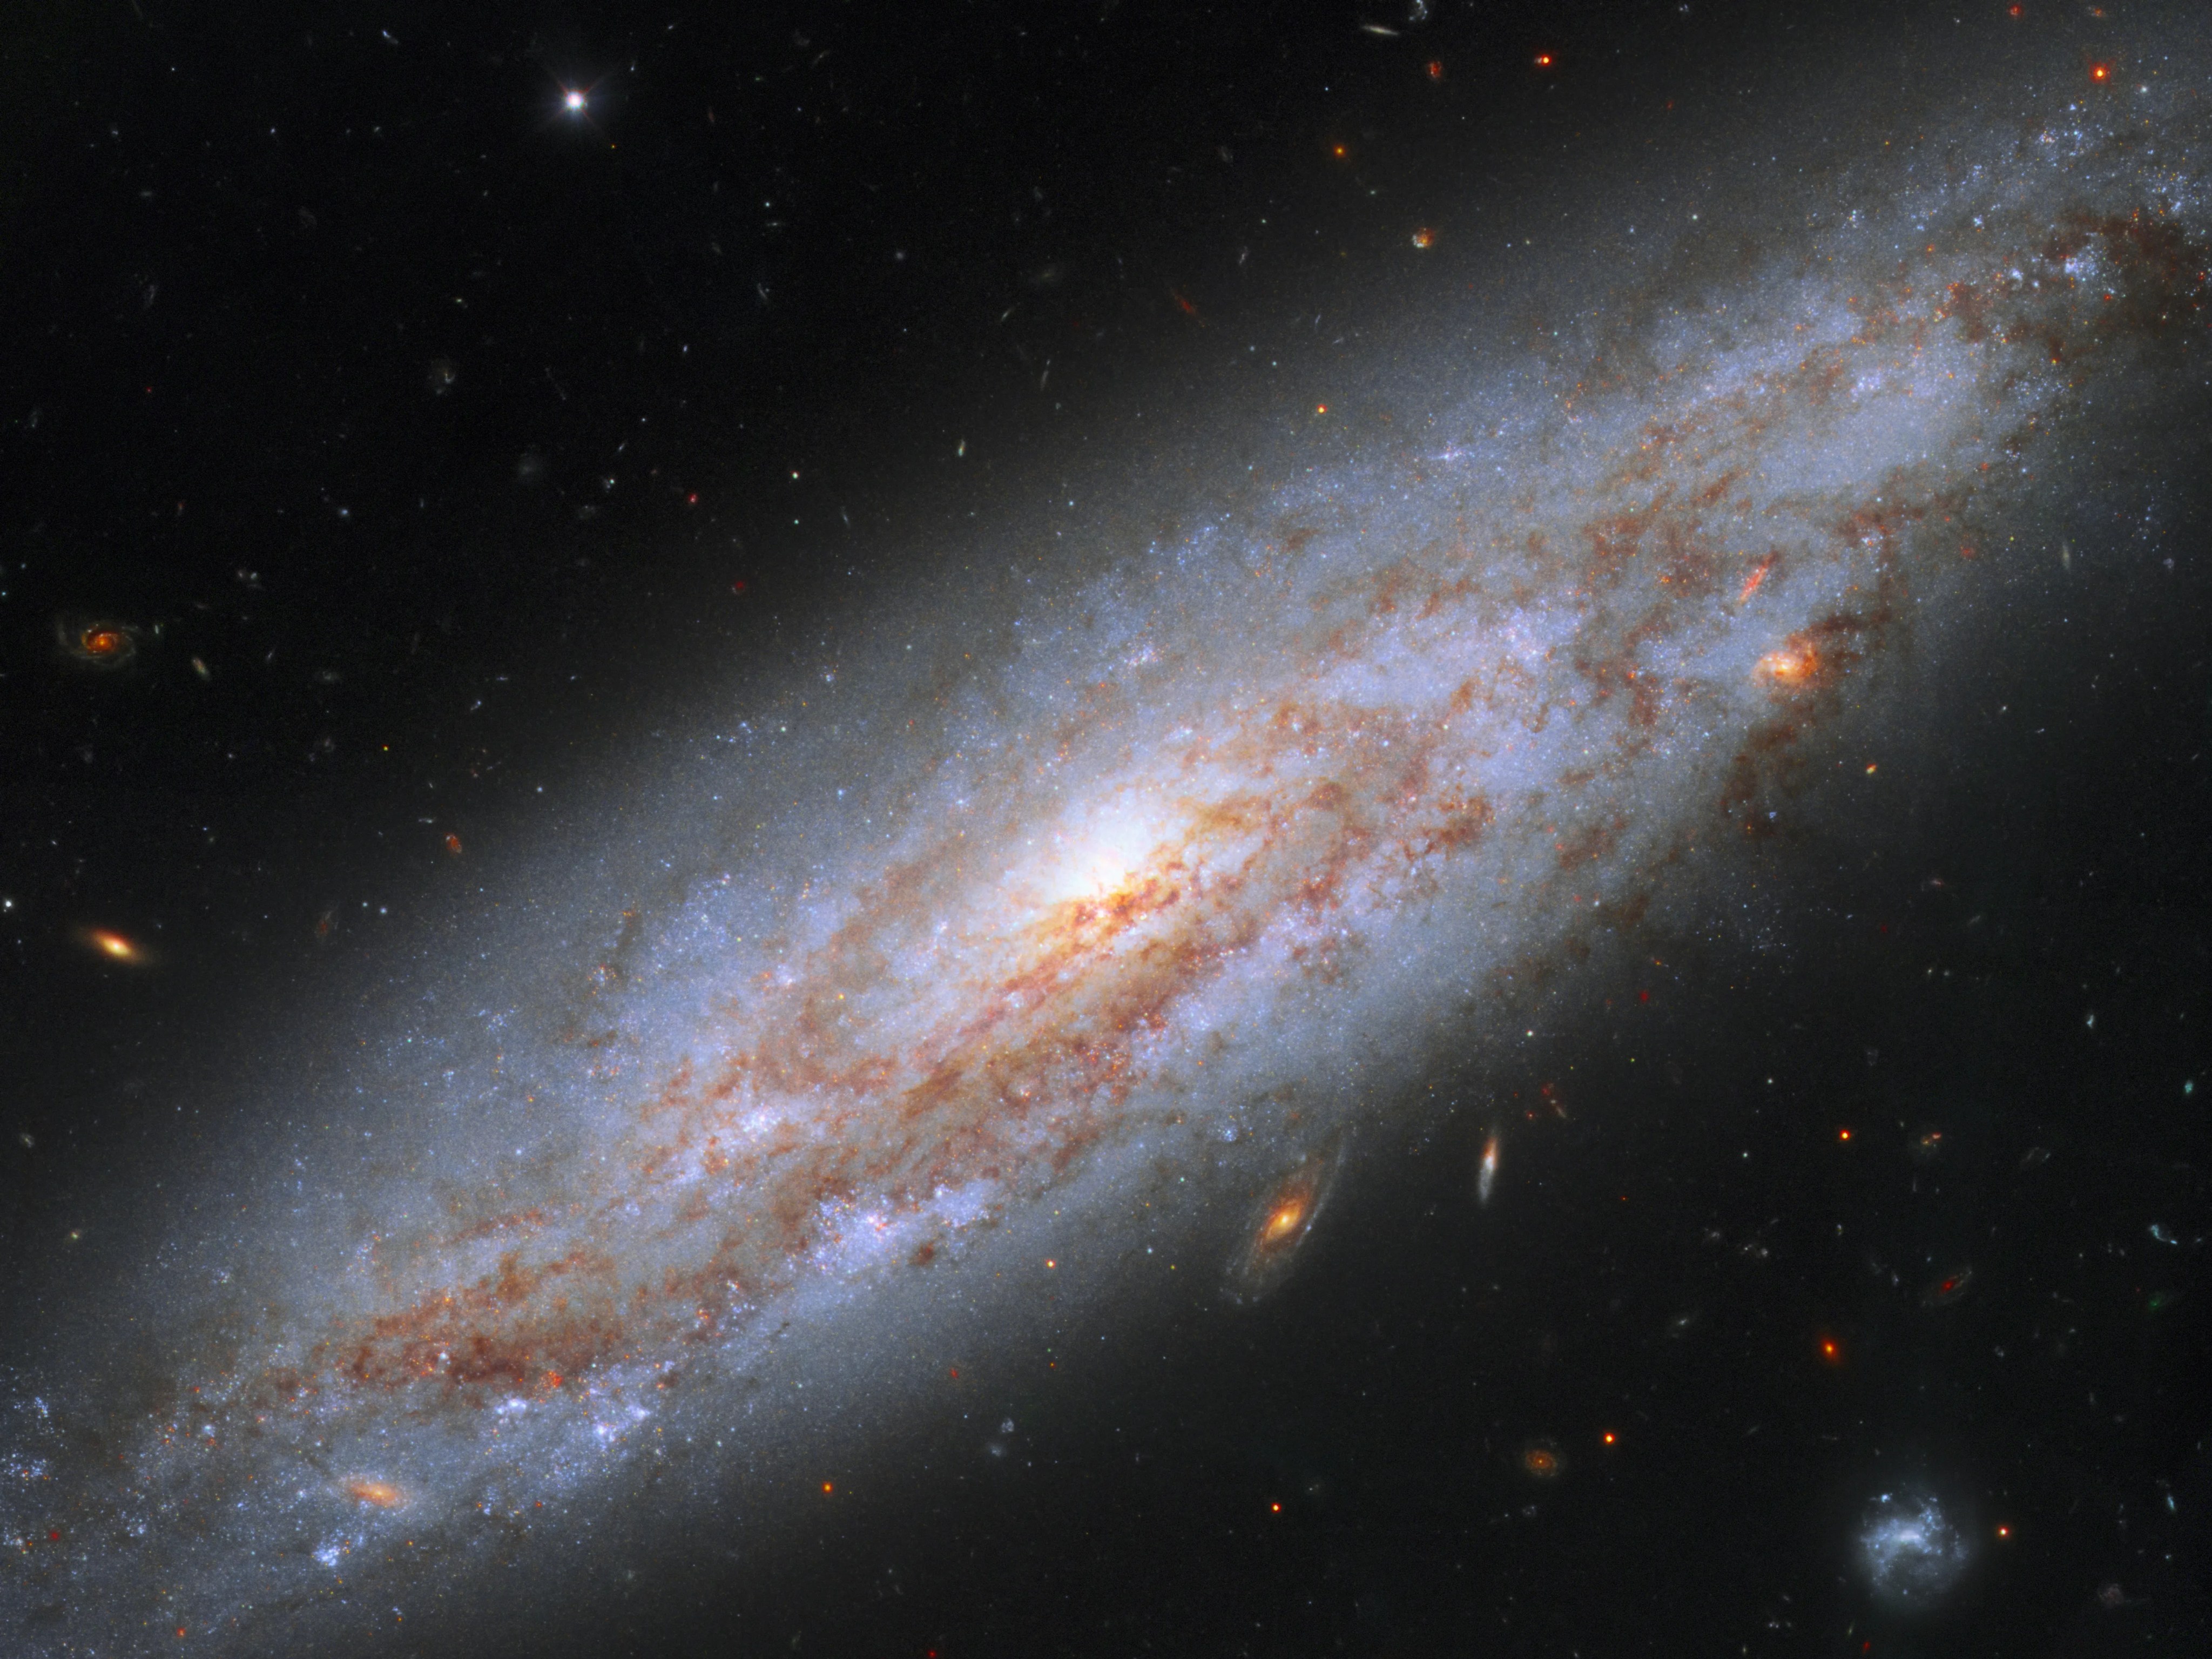 Pretty spiral galaxy seen diagonally